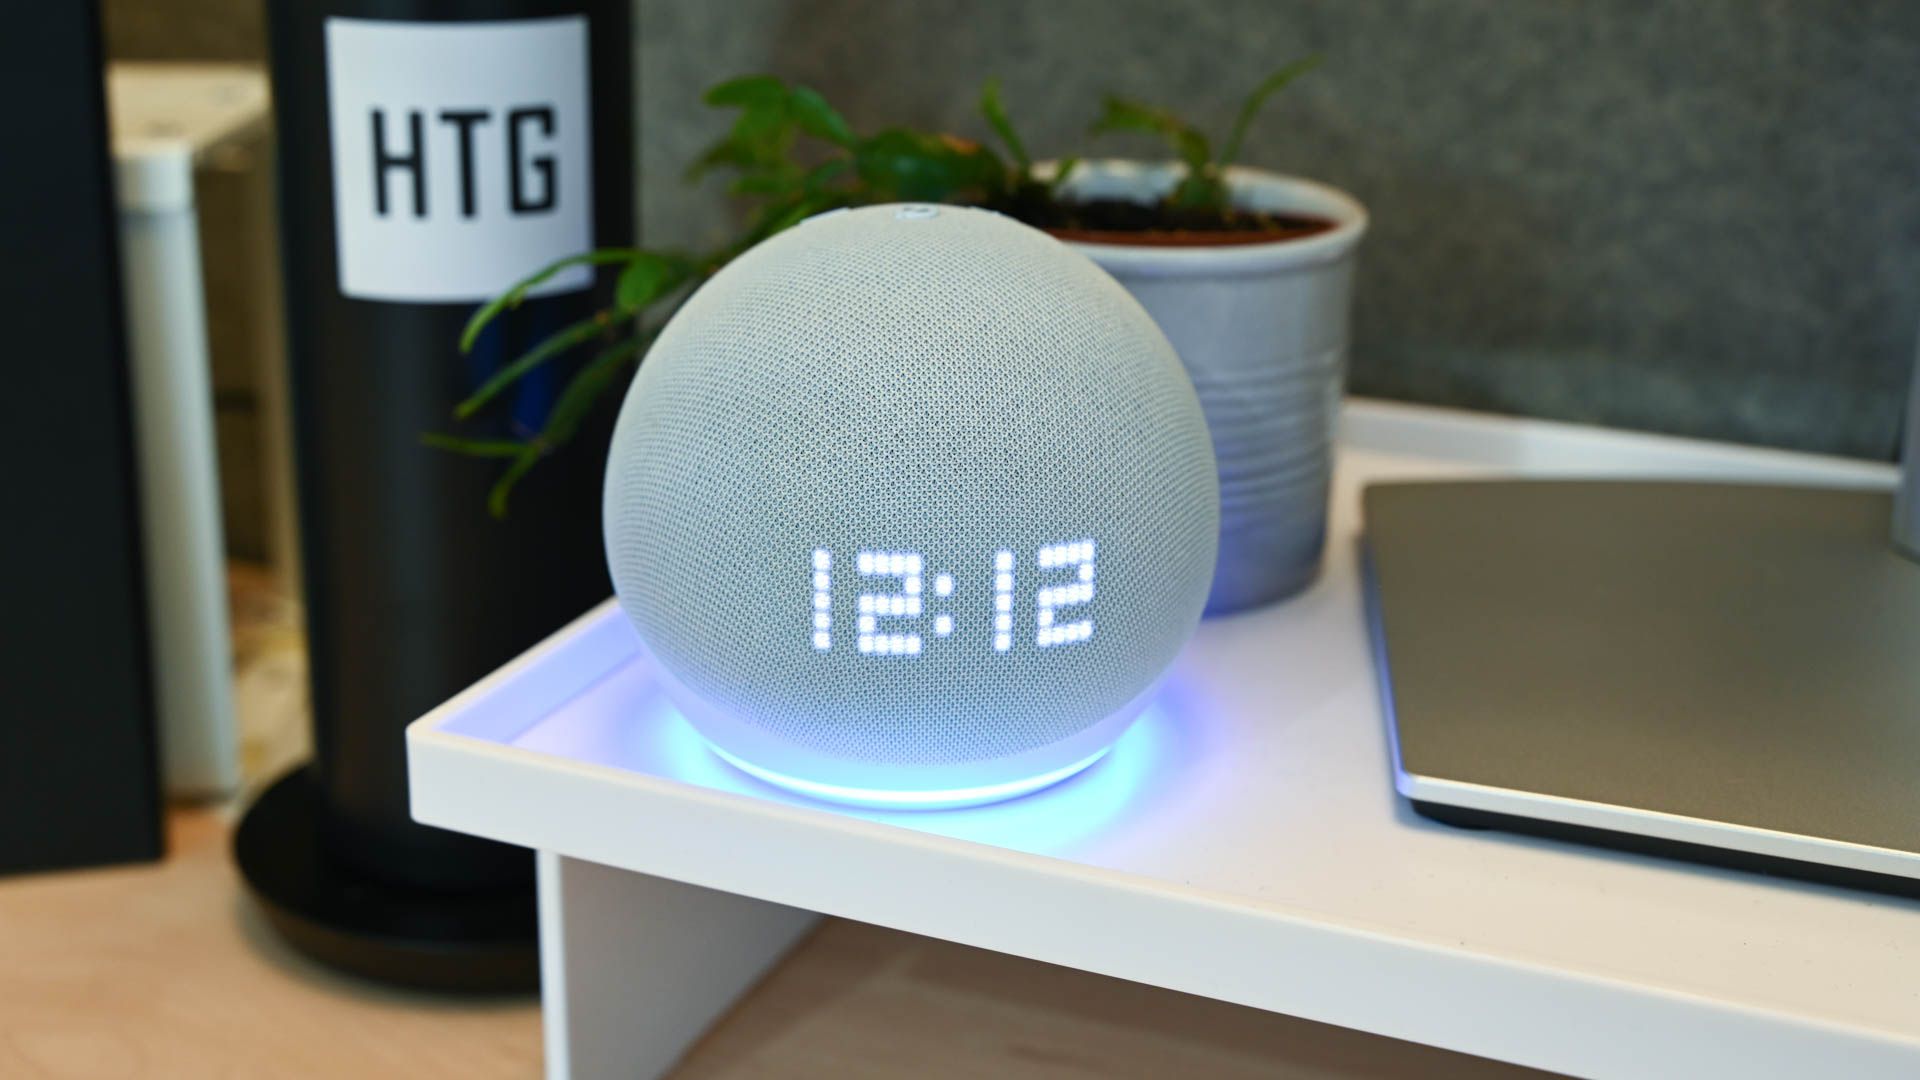 Best Buy:  Echo Dot (4th Gen) Smart speaker with Alexa